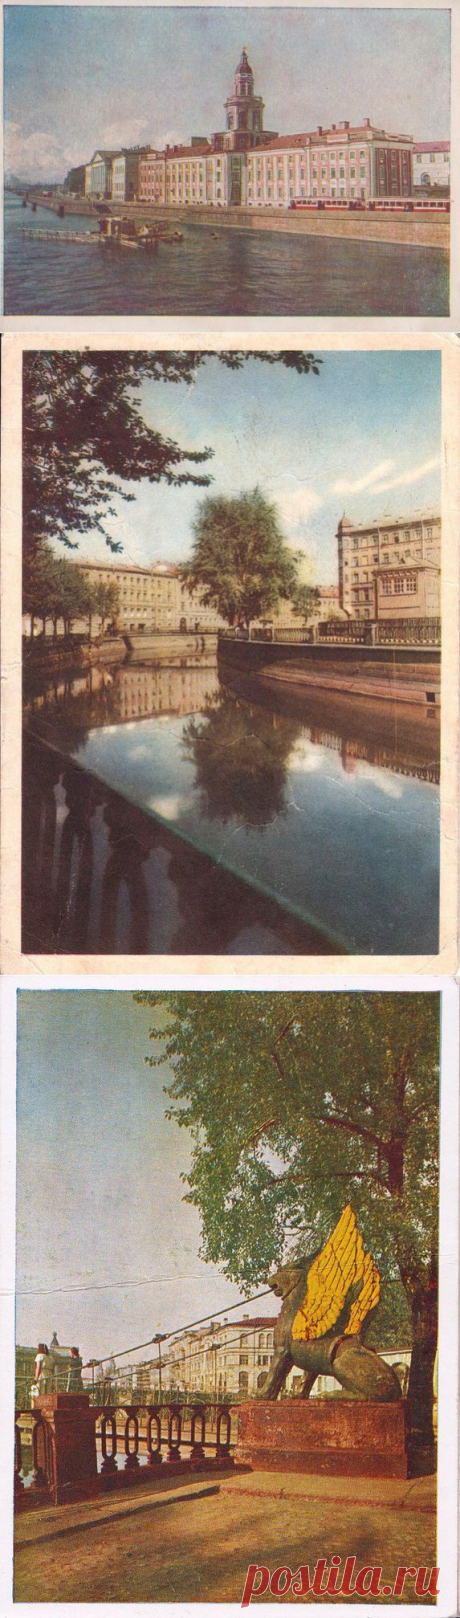 babs71: Ленинград. 1952-55